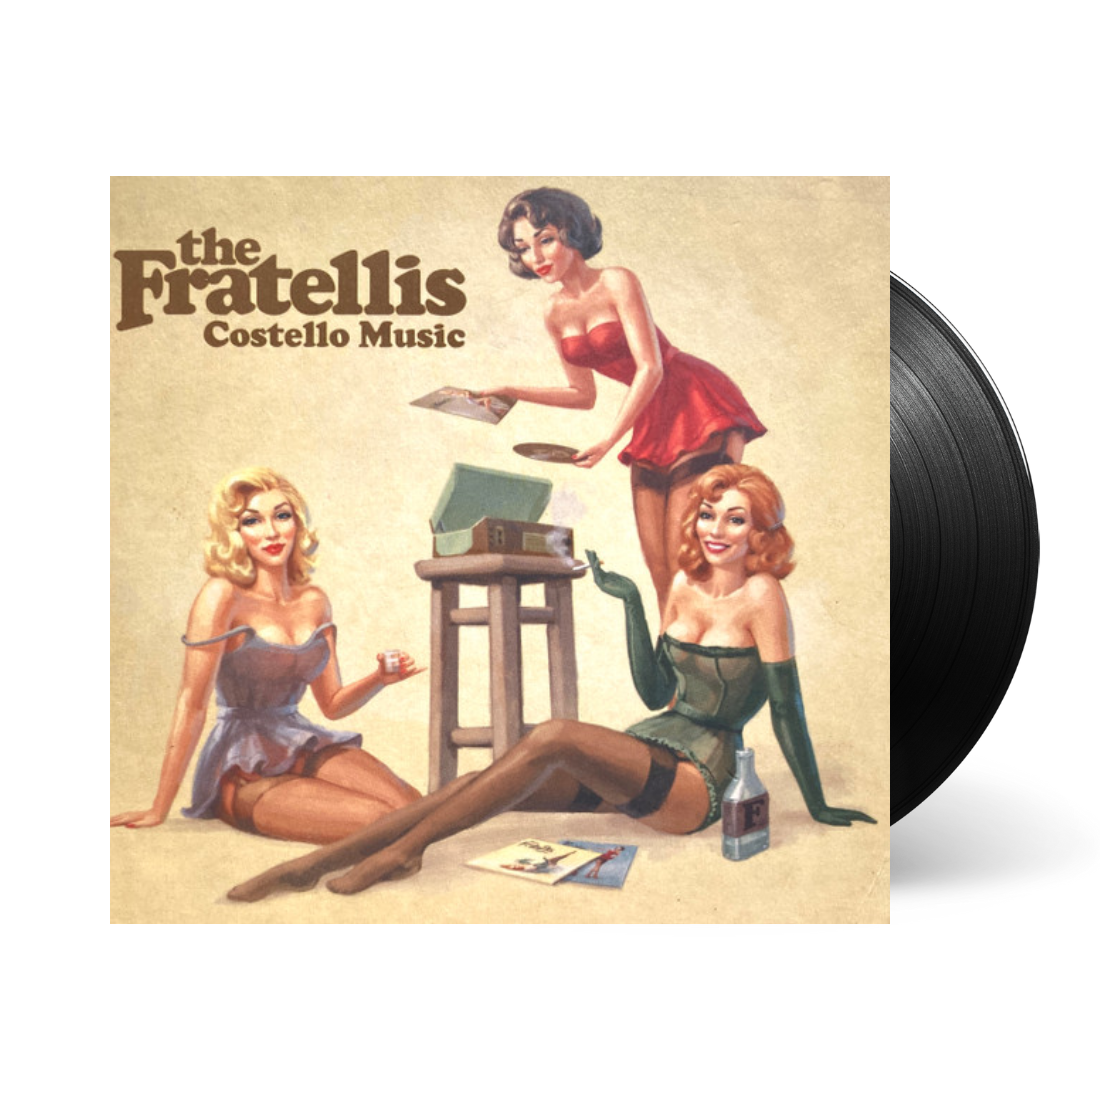 The Fratellis - Costello Music: Vinyl LP - Island Records